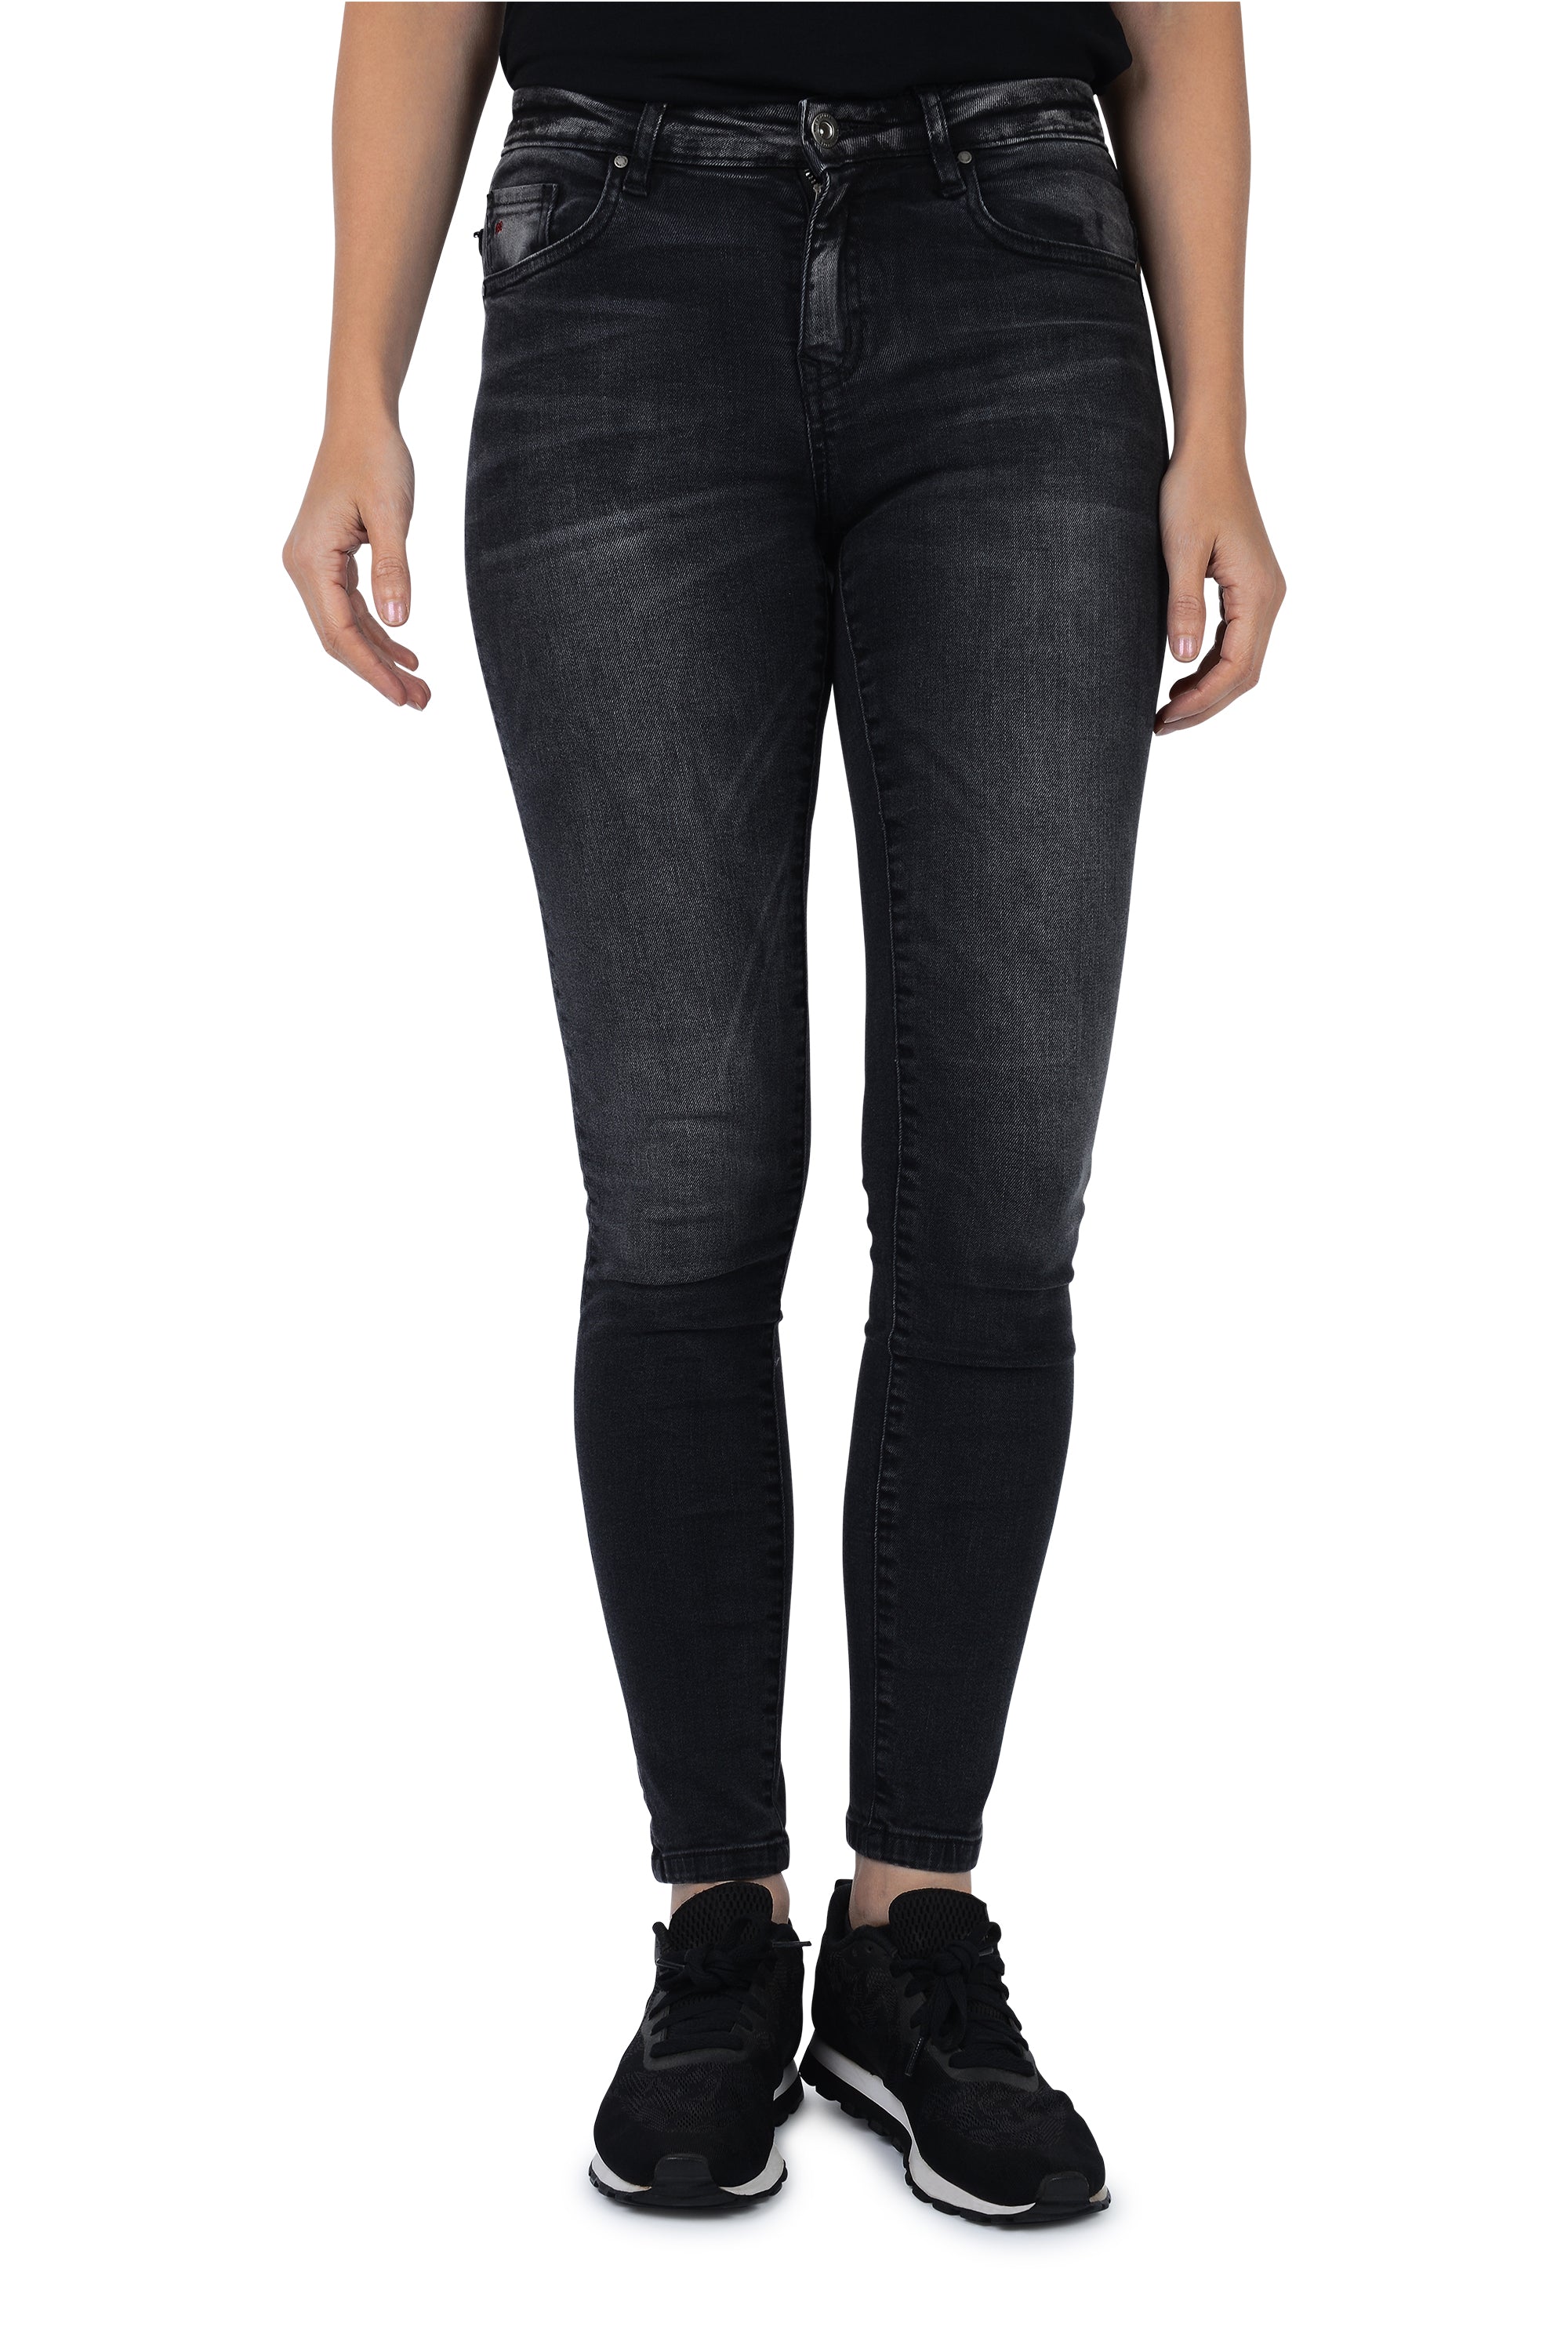 Jessica Simpson Ladies' Skinny Jean | Costco